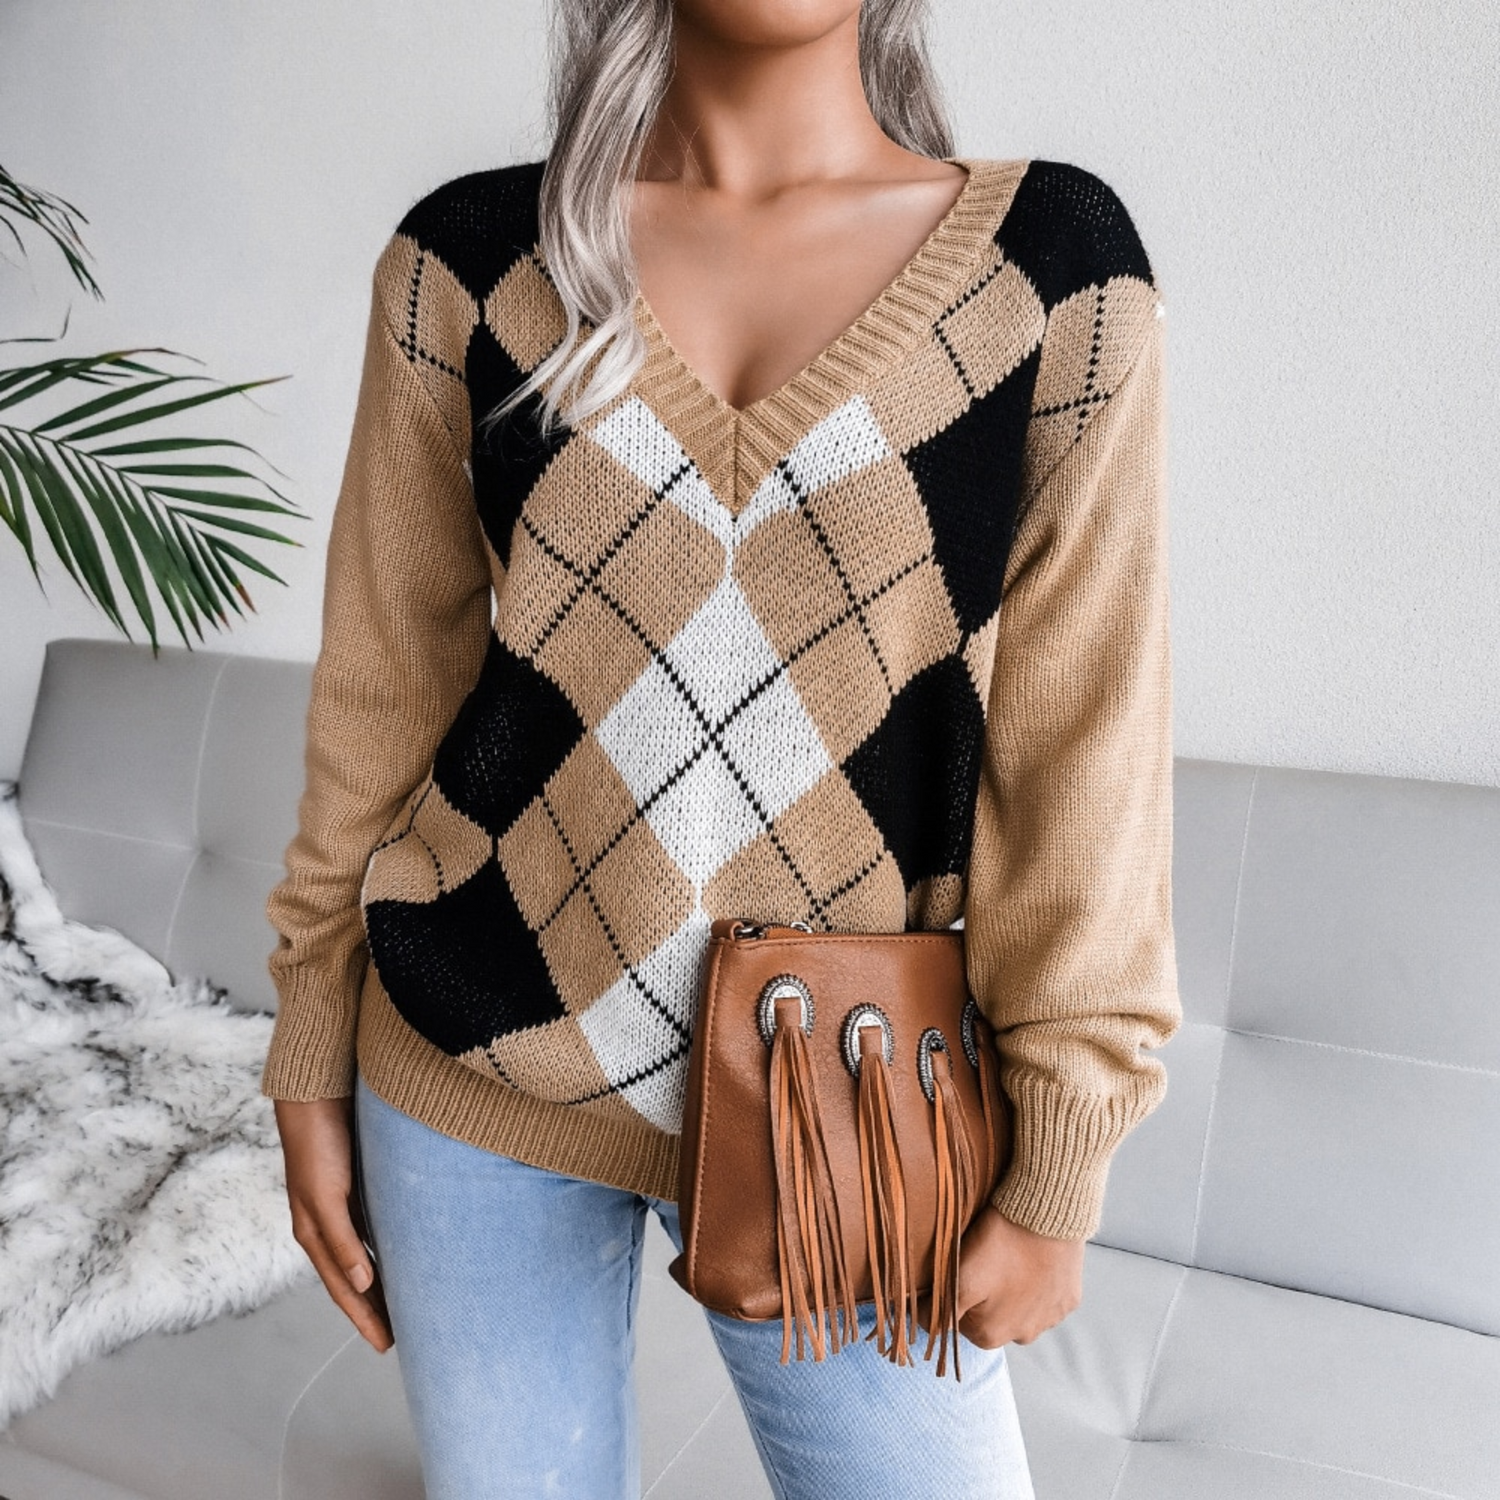 Paula - Beige Argyle Knitted V-Neck Sweater Top - Model Mannequin